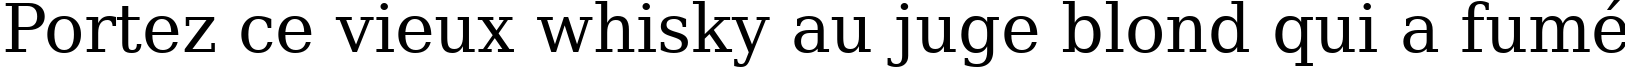 Пример написания шрифтом ae_Sharjah текста на французском